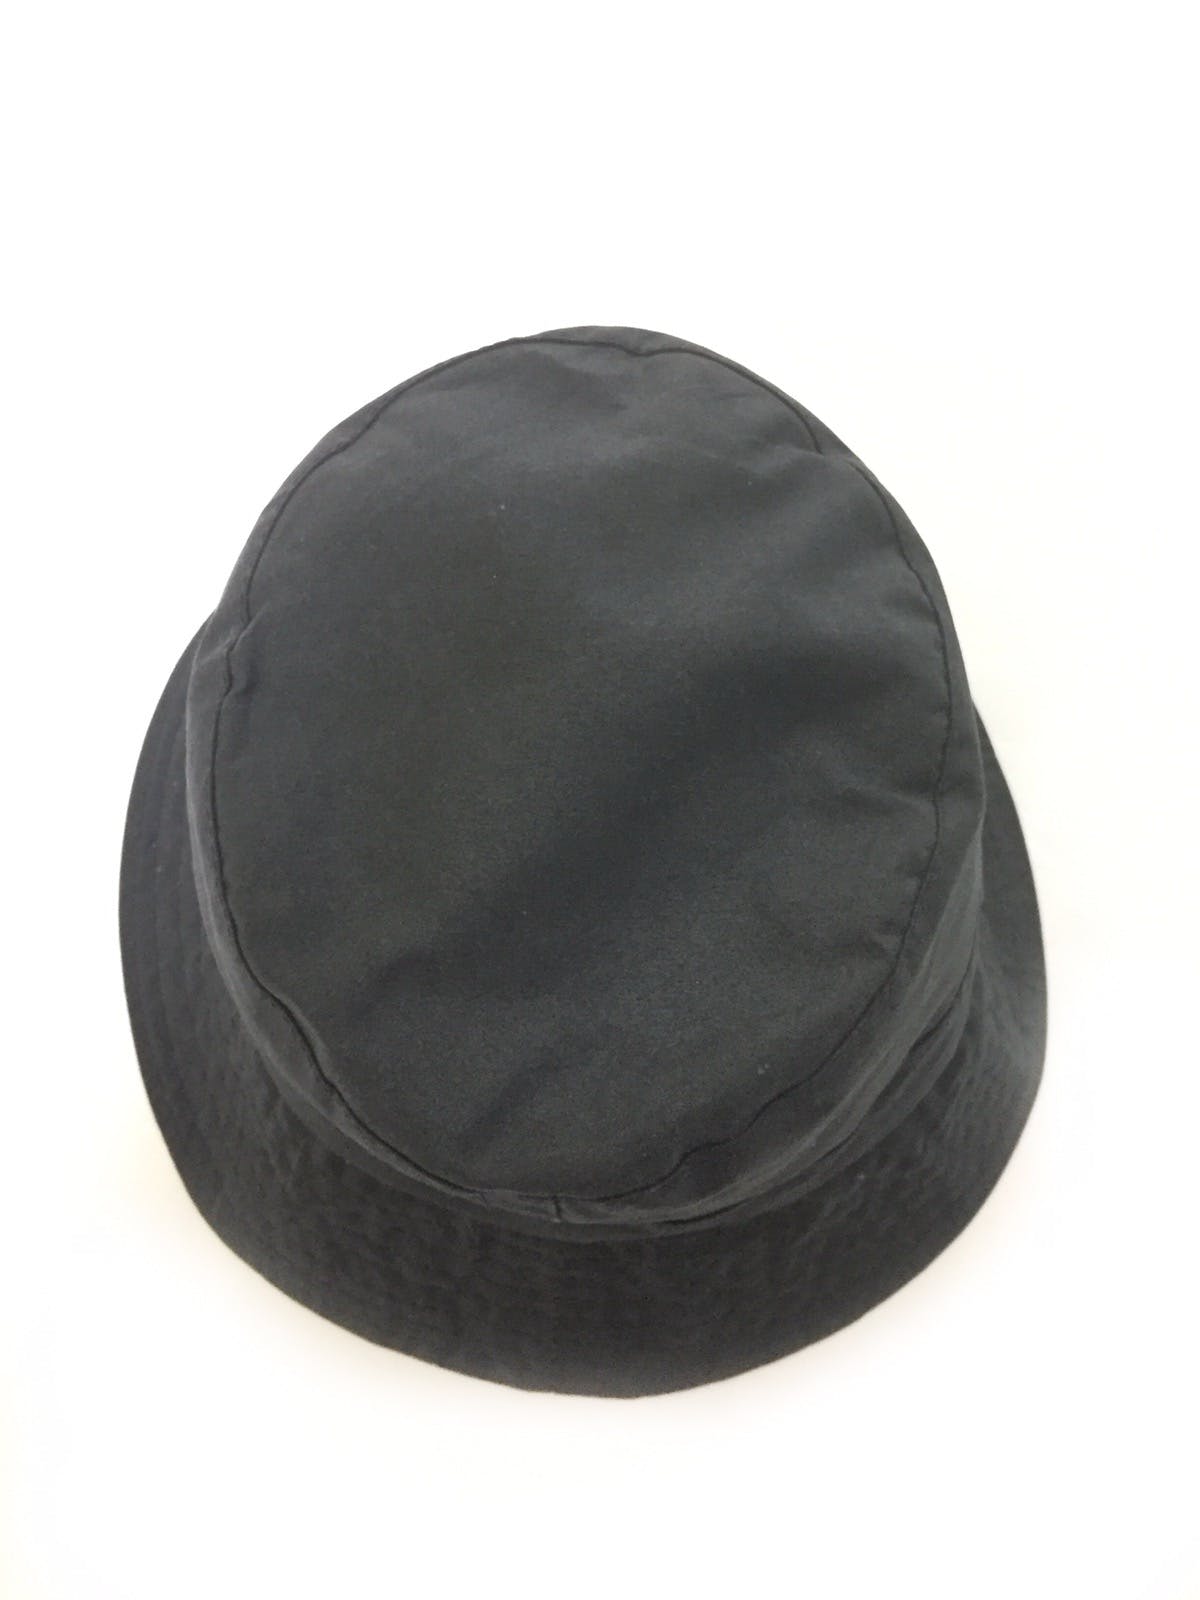 Barbour international wax bucket hat xl size - 3